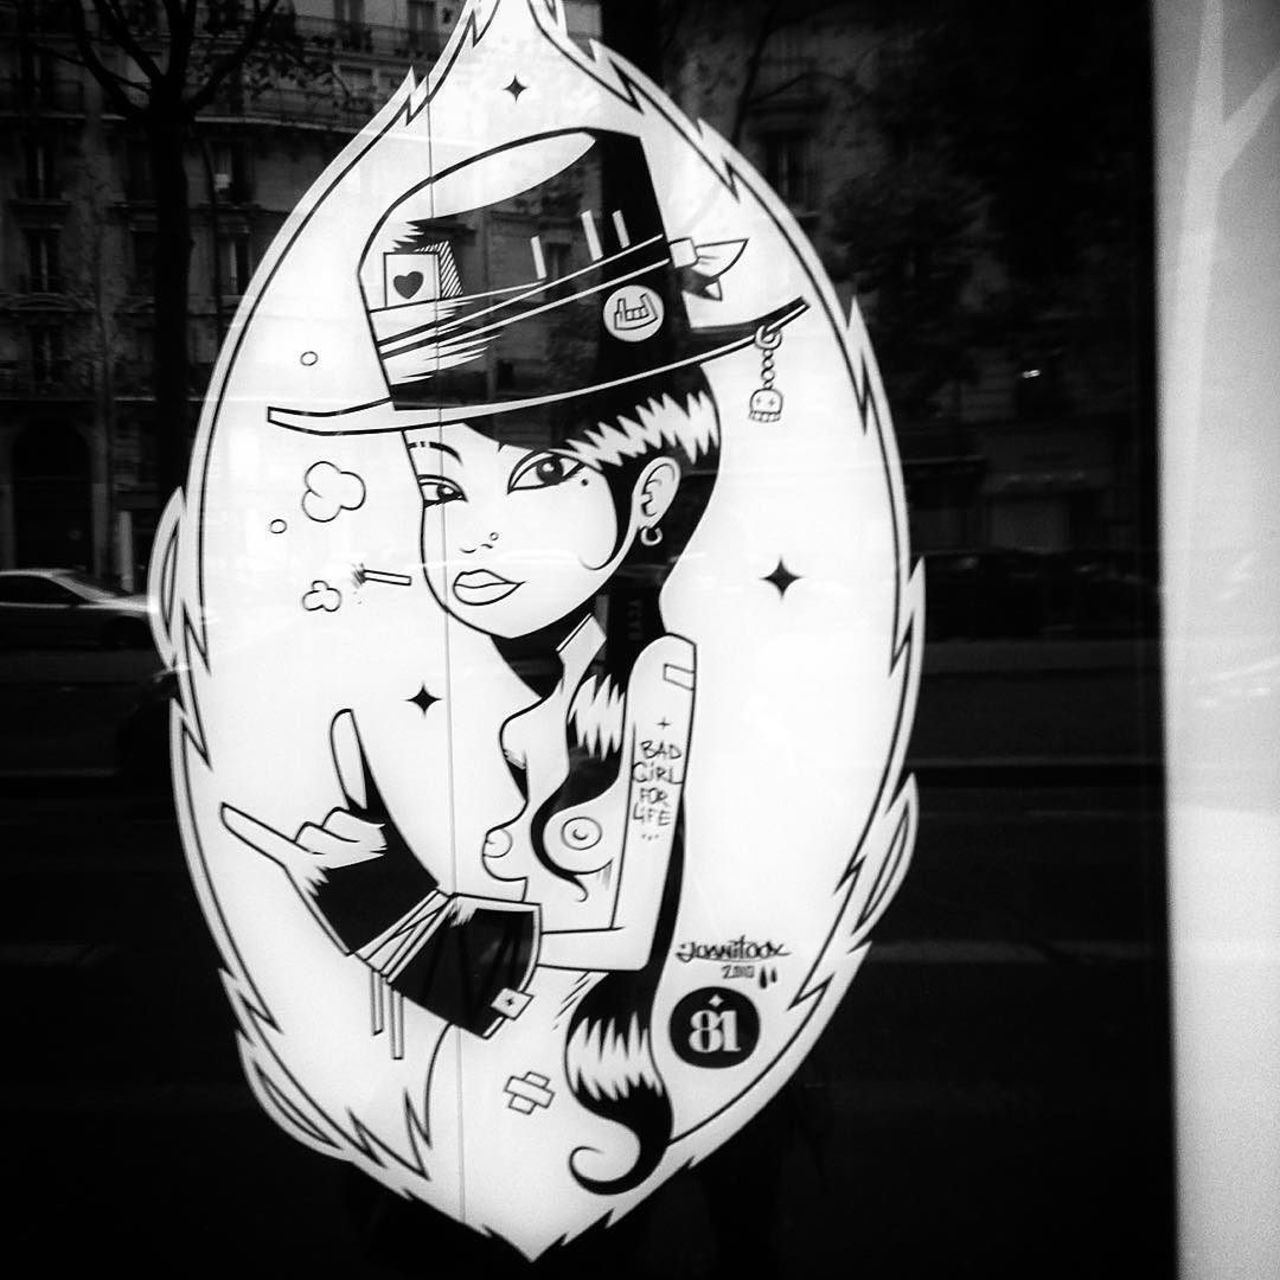 #Paris #graffiti photo by @stefetlinda http://ift.tt/2018C8C #StreetArt https://t.co/DNDdYxOXy2